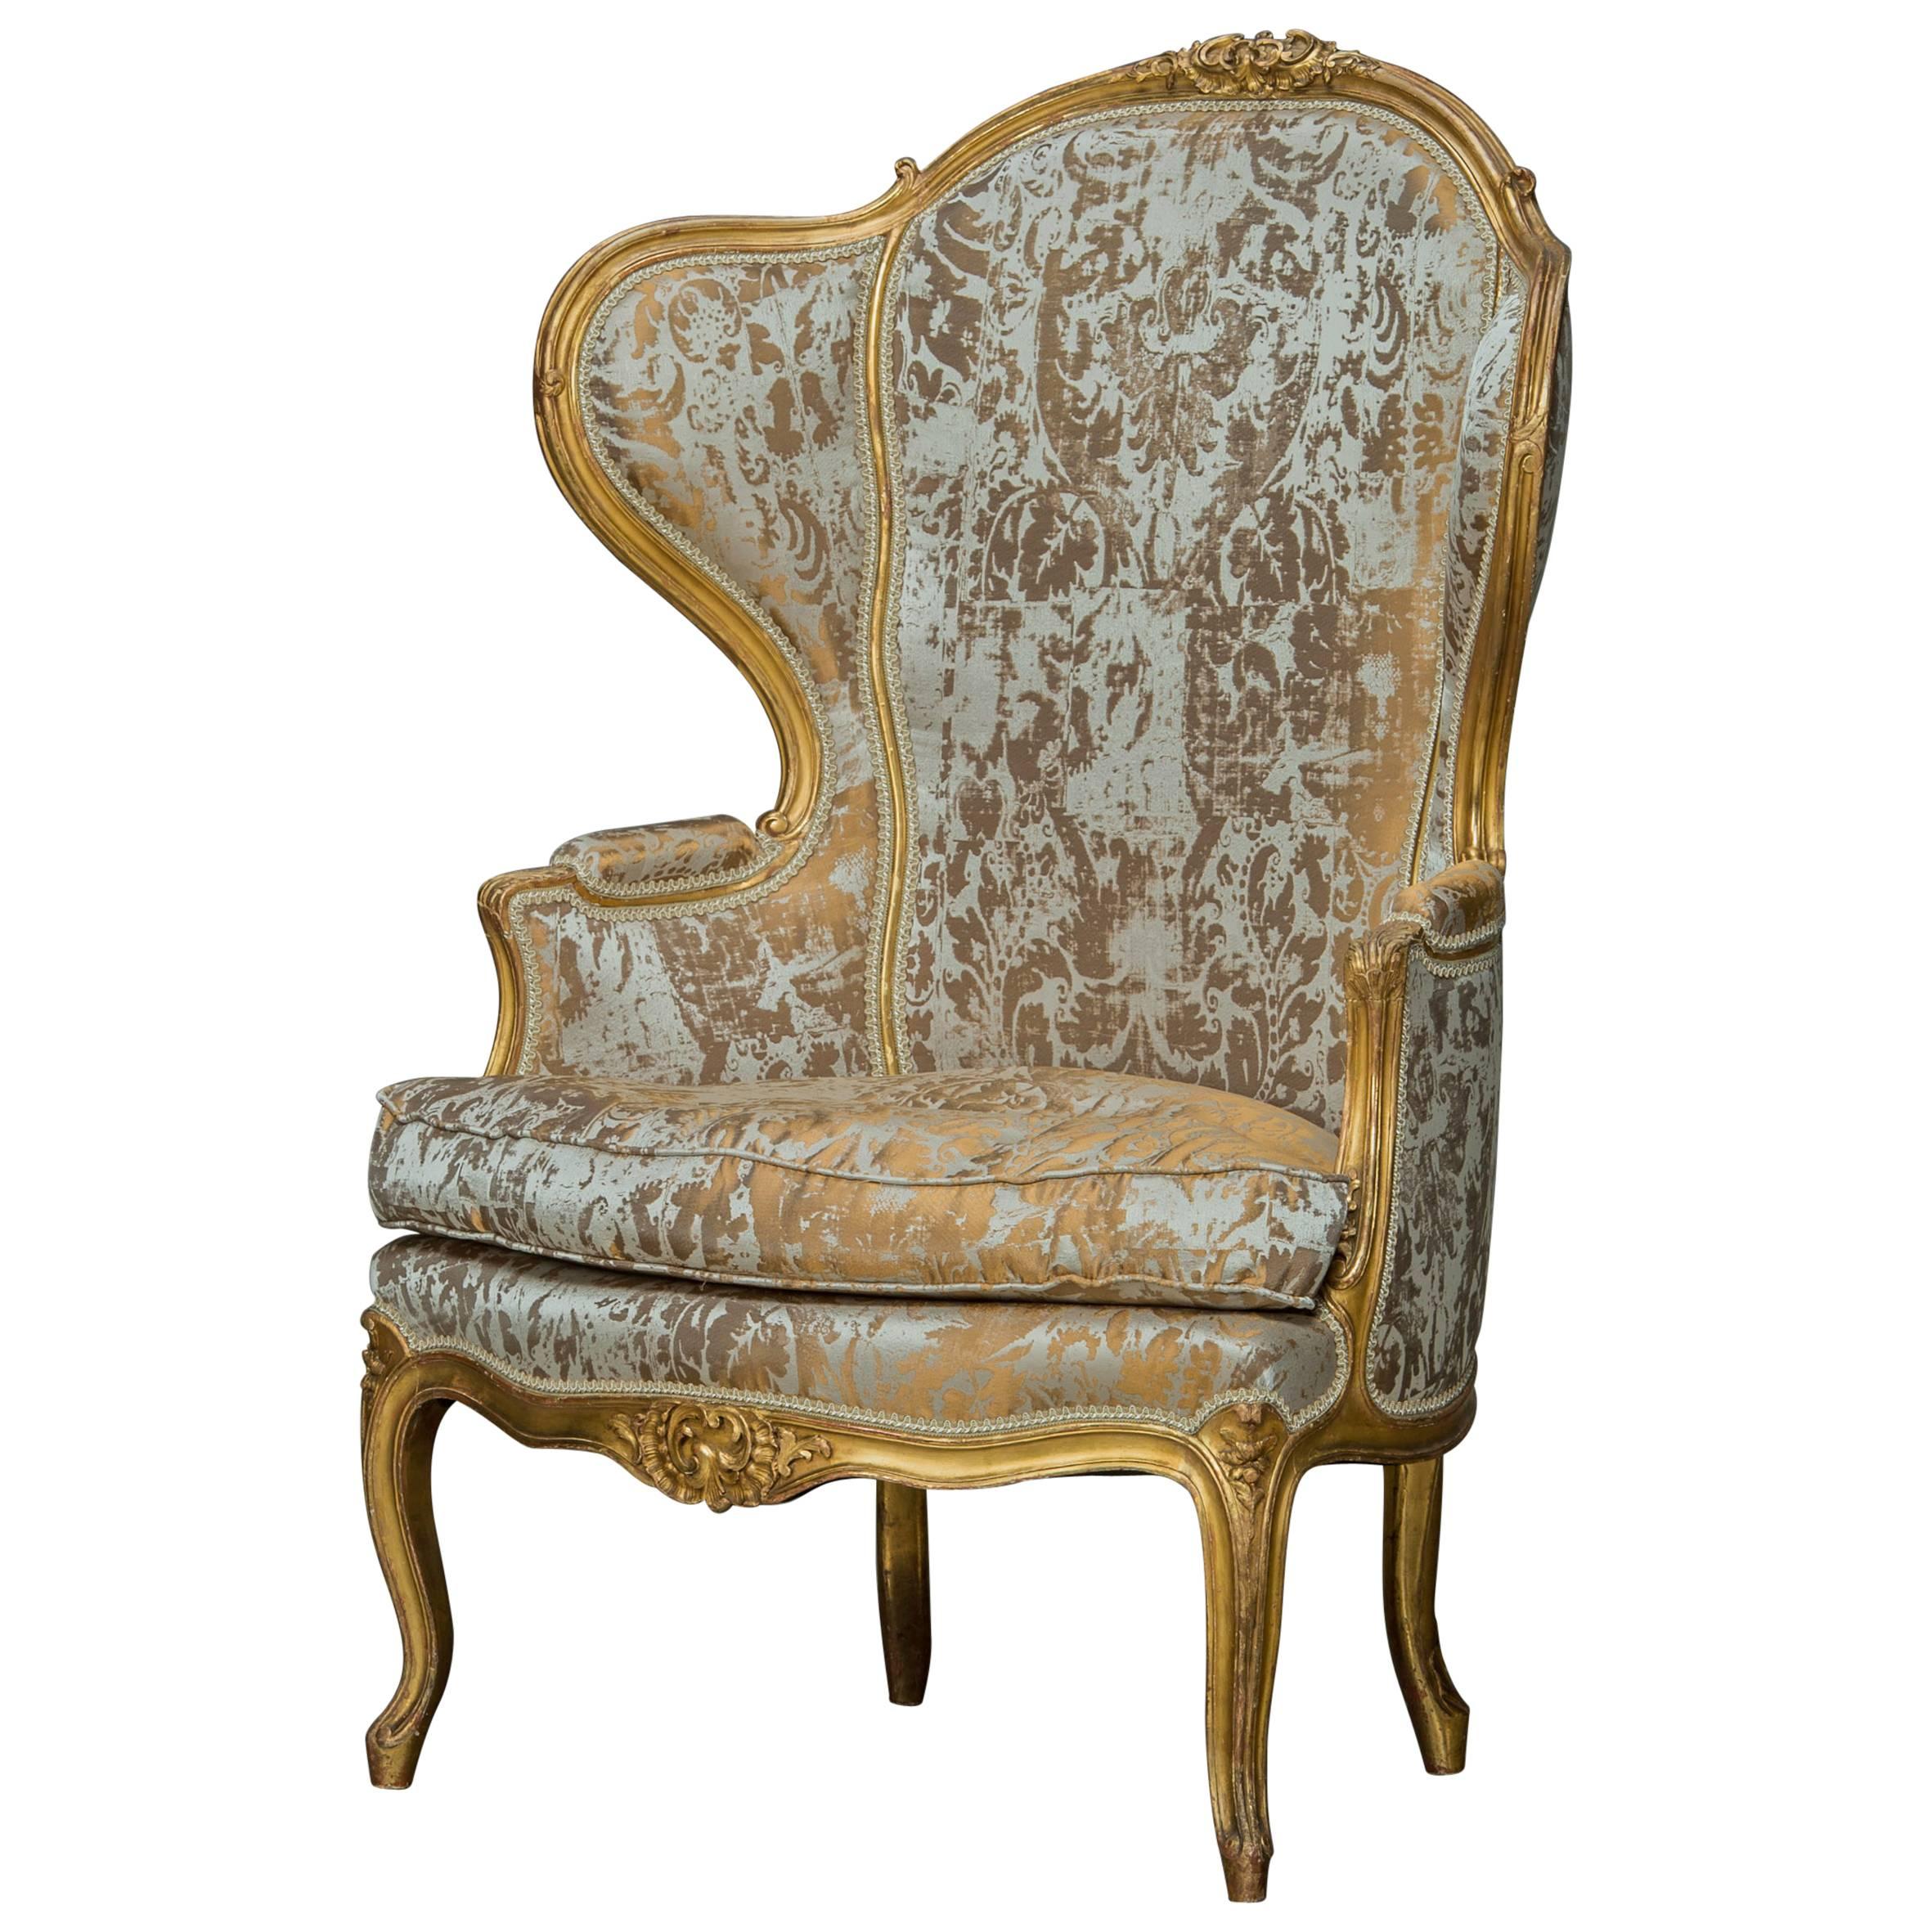 Napoleon III Wingback Chair, France circa 1860